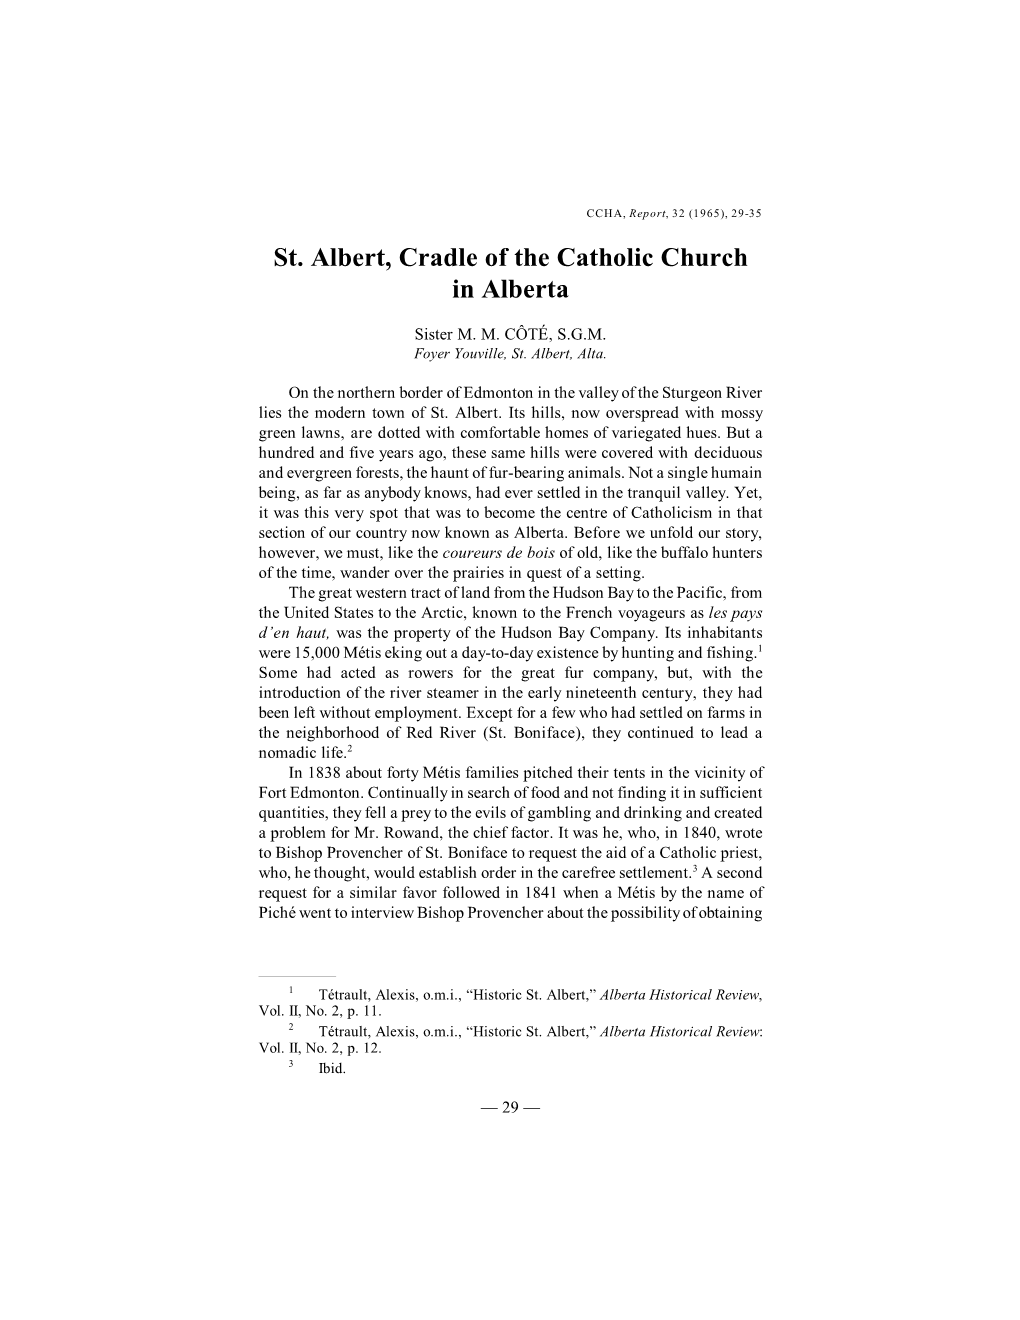 St. Albert, Cradle of the Catholic Church in Alberta